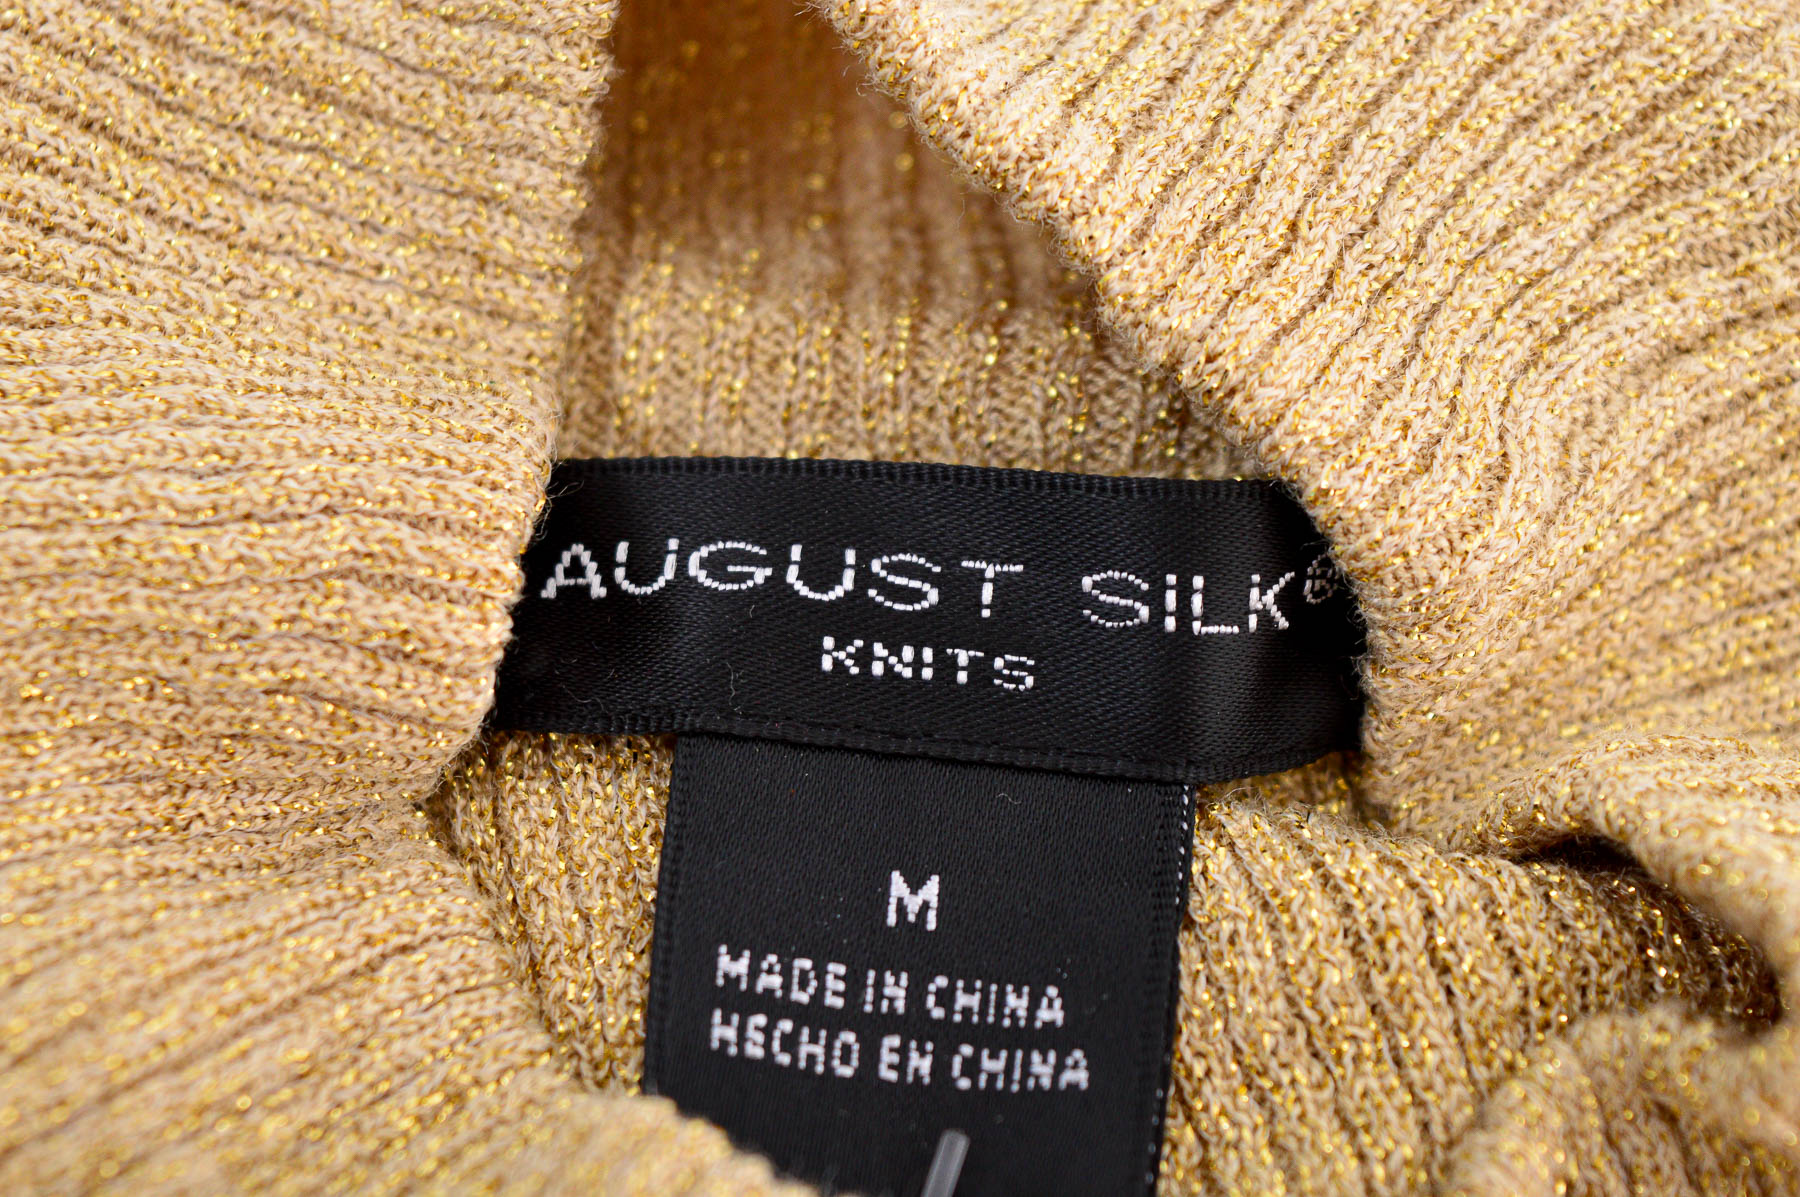 Pulover de damă - August Silk - 2